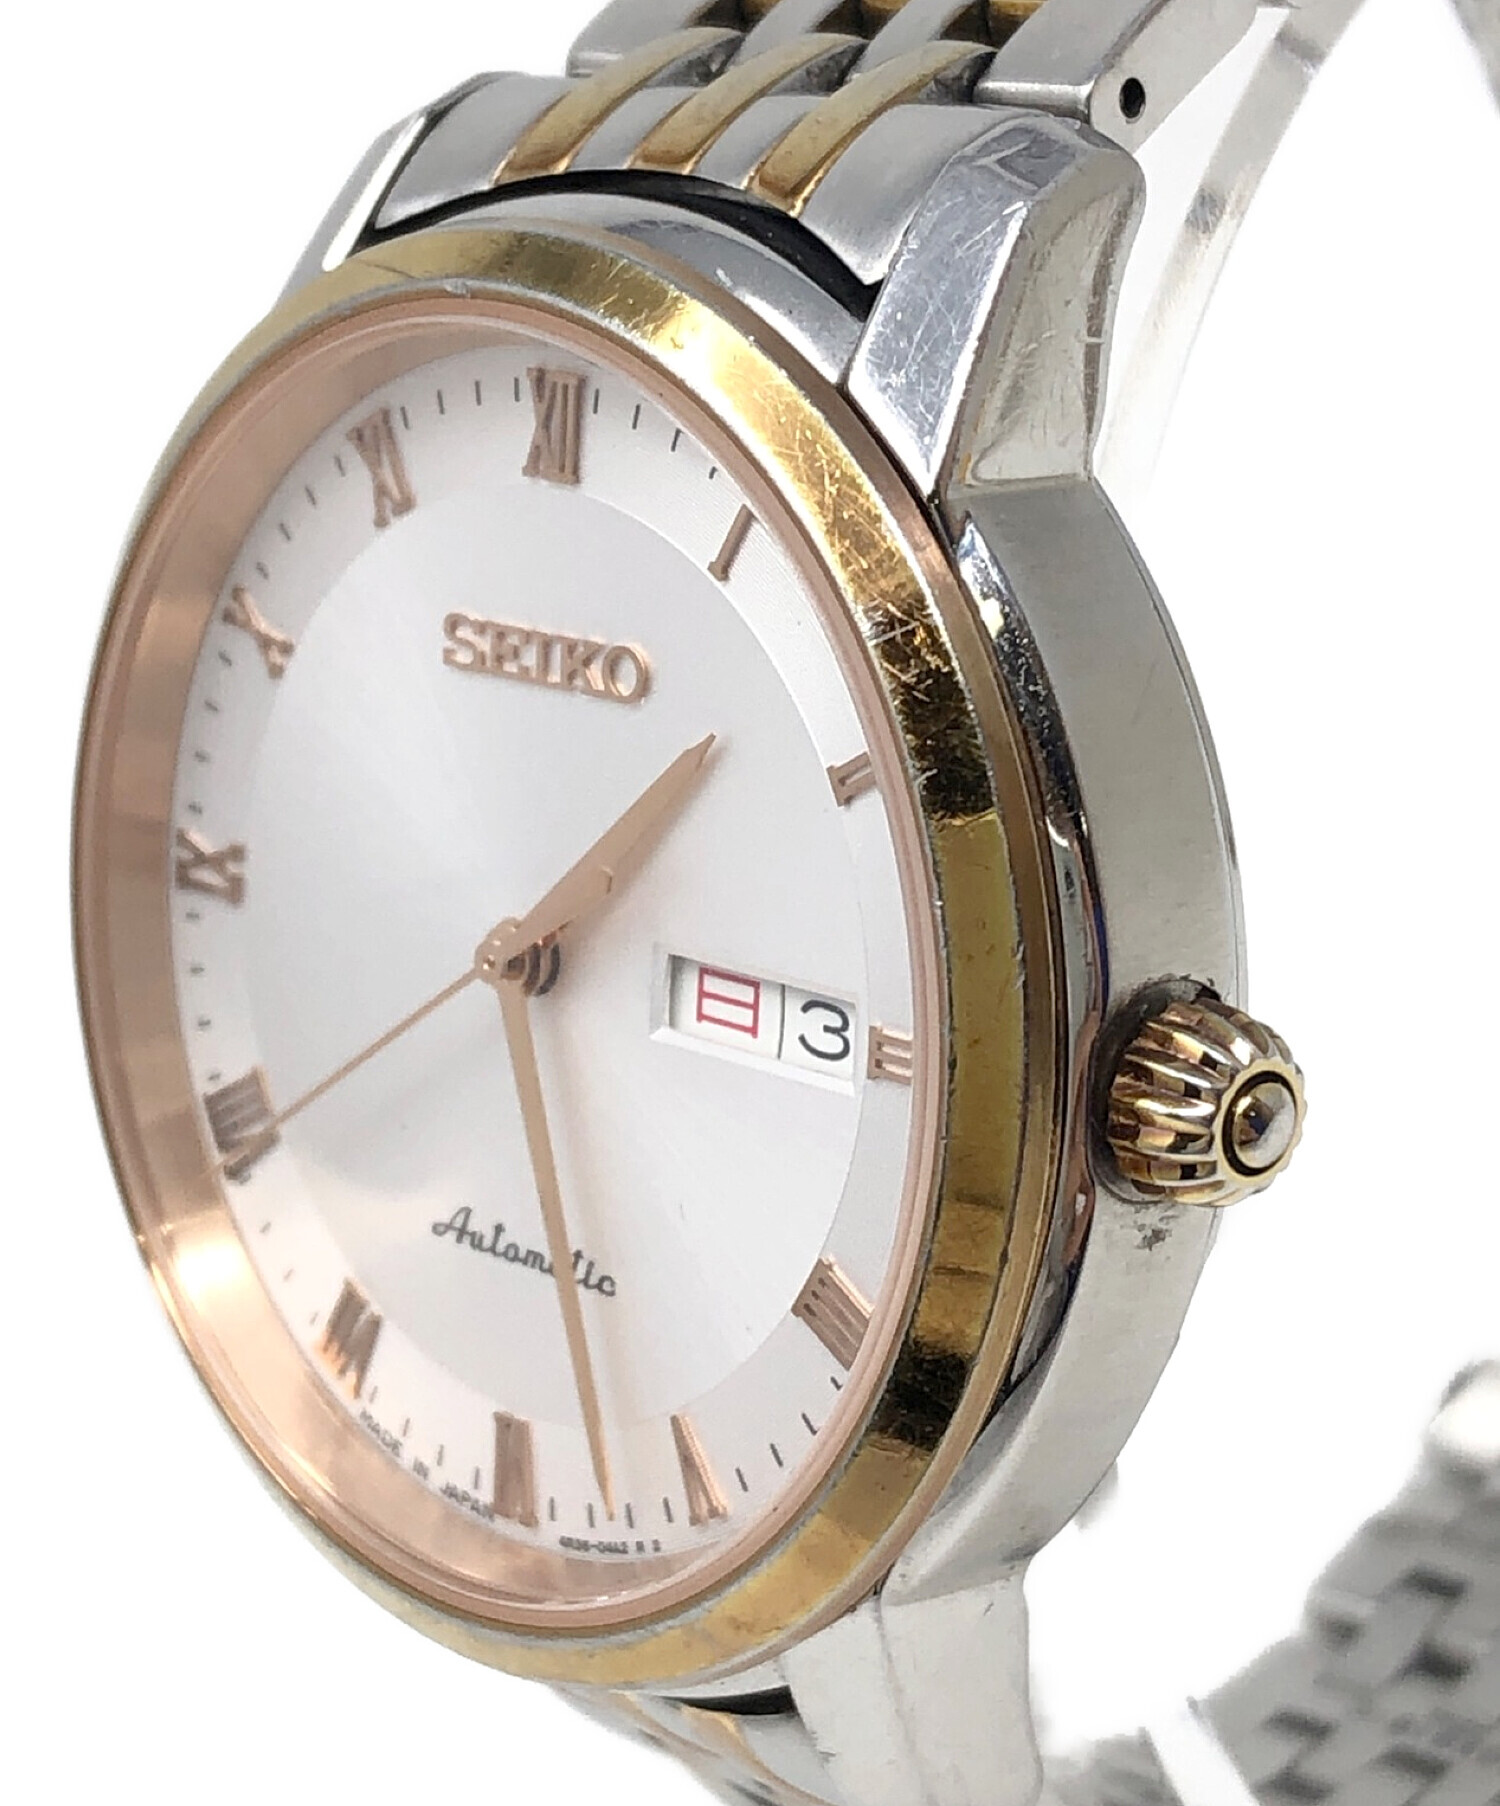 SEIKO (セイコー) 腕時計 自動巻き サイズ:実寸サイズにてご確認ください。